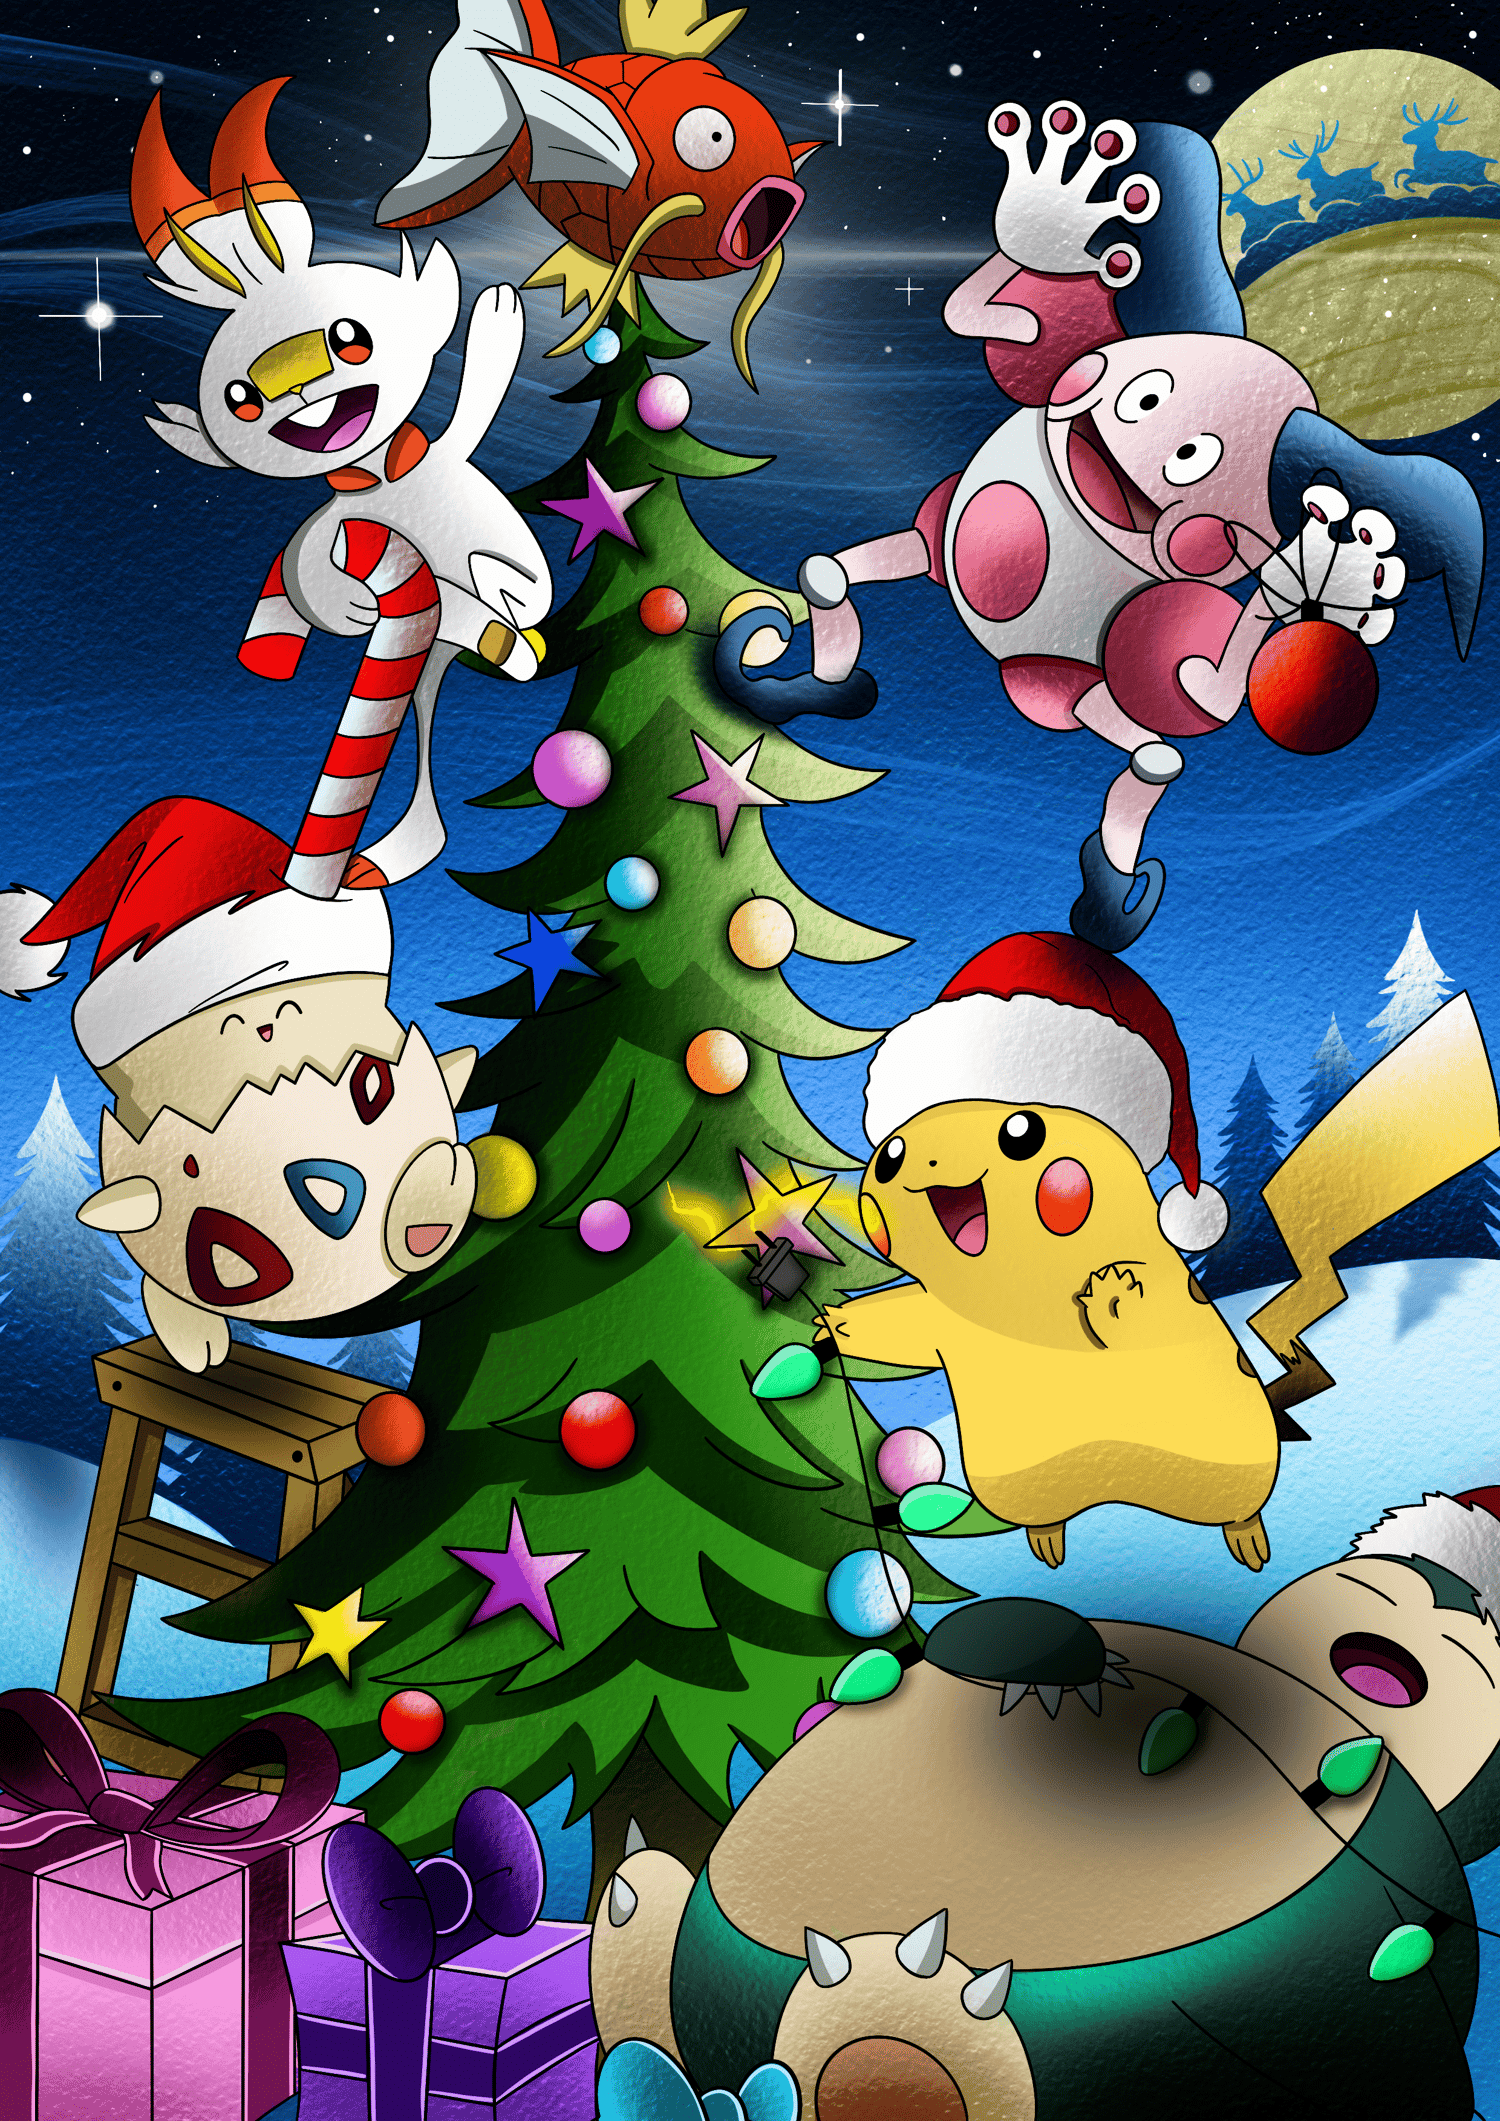 pokemon merry christmas